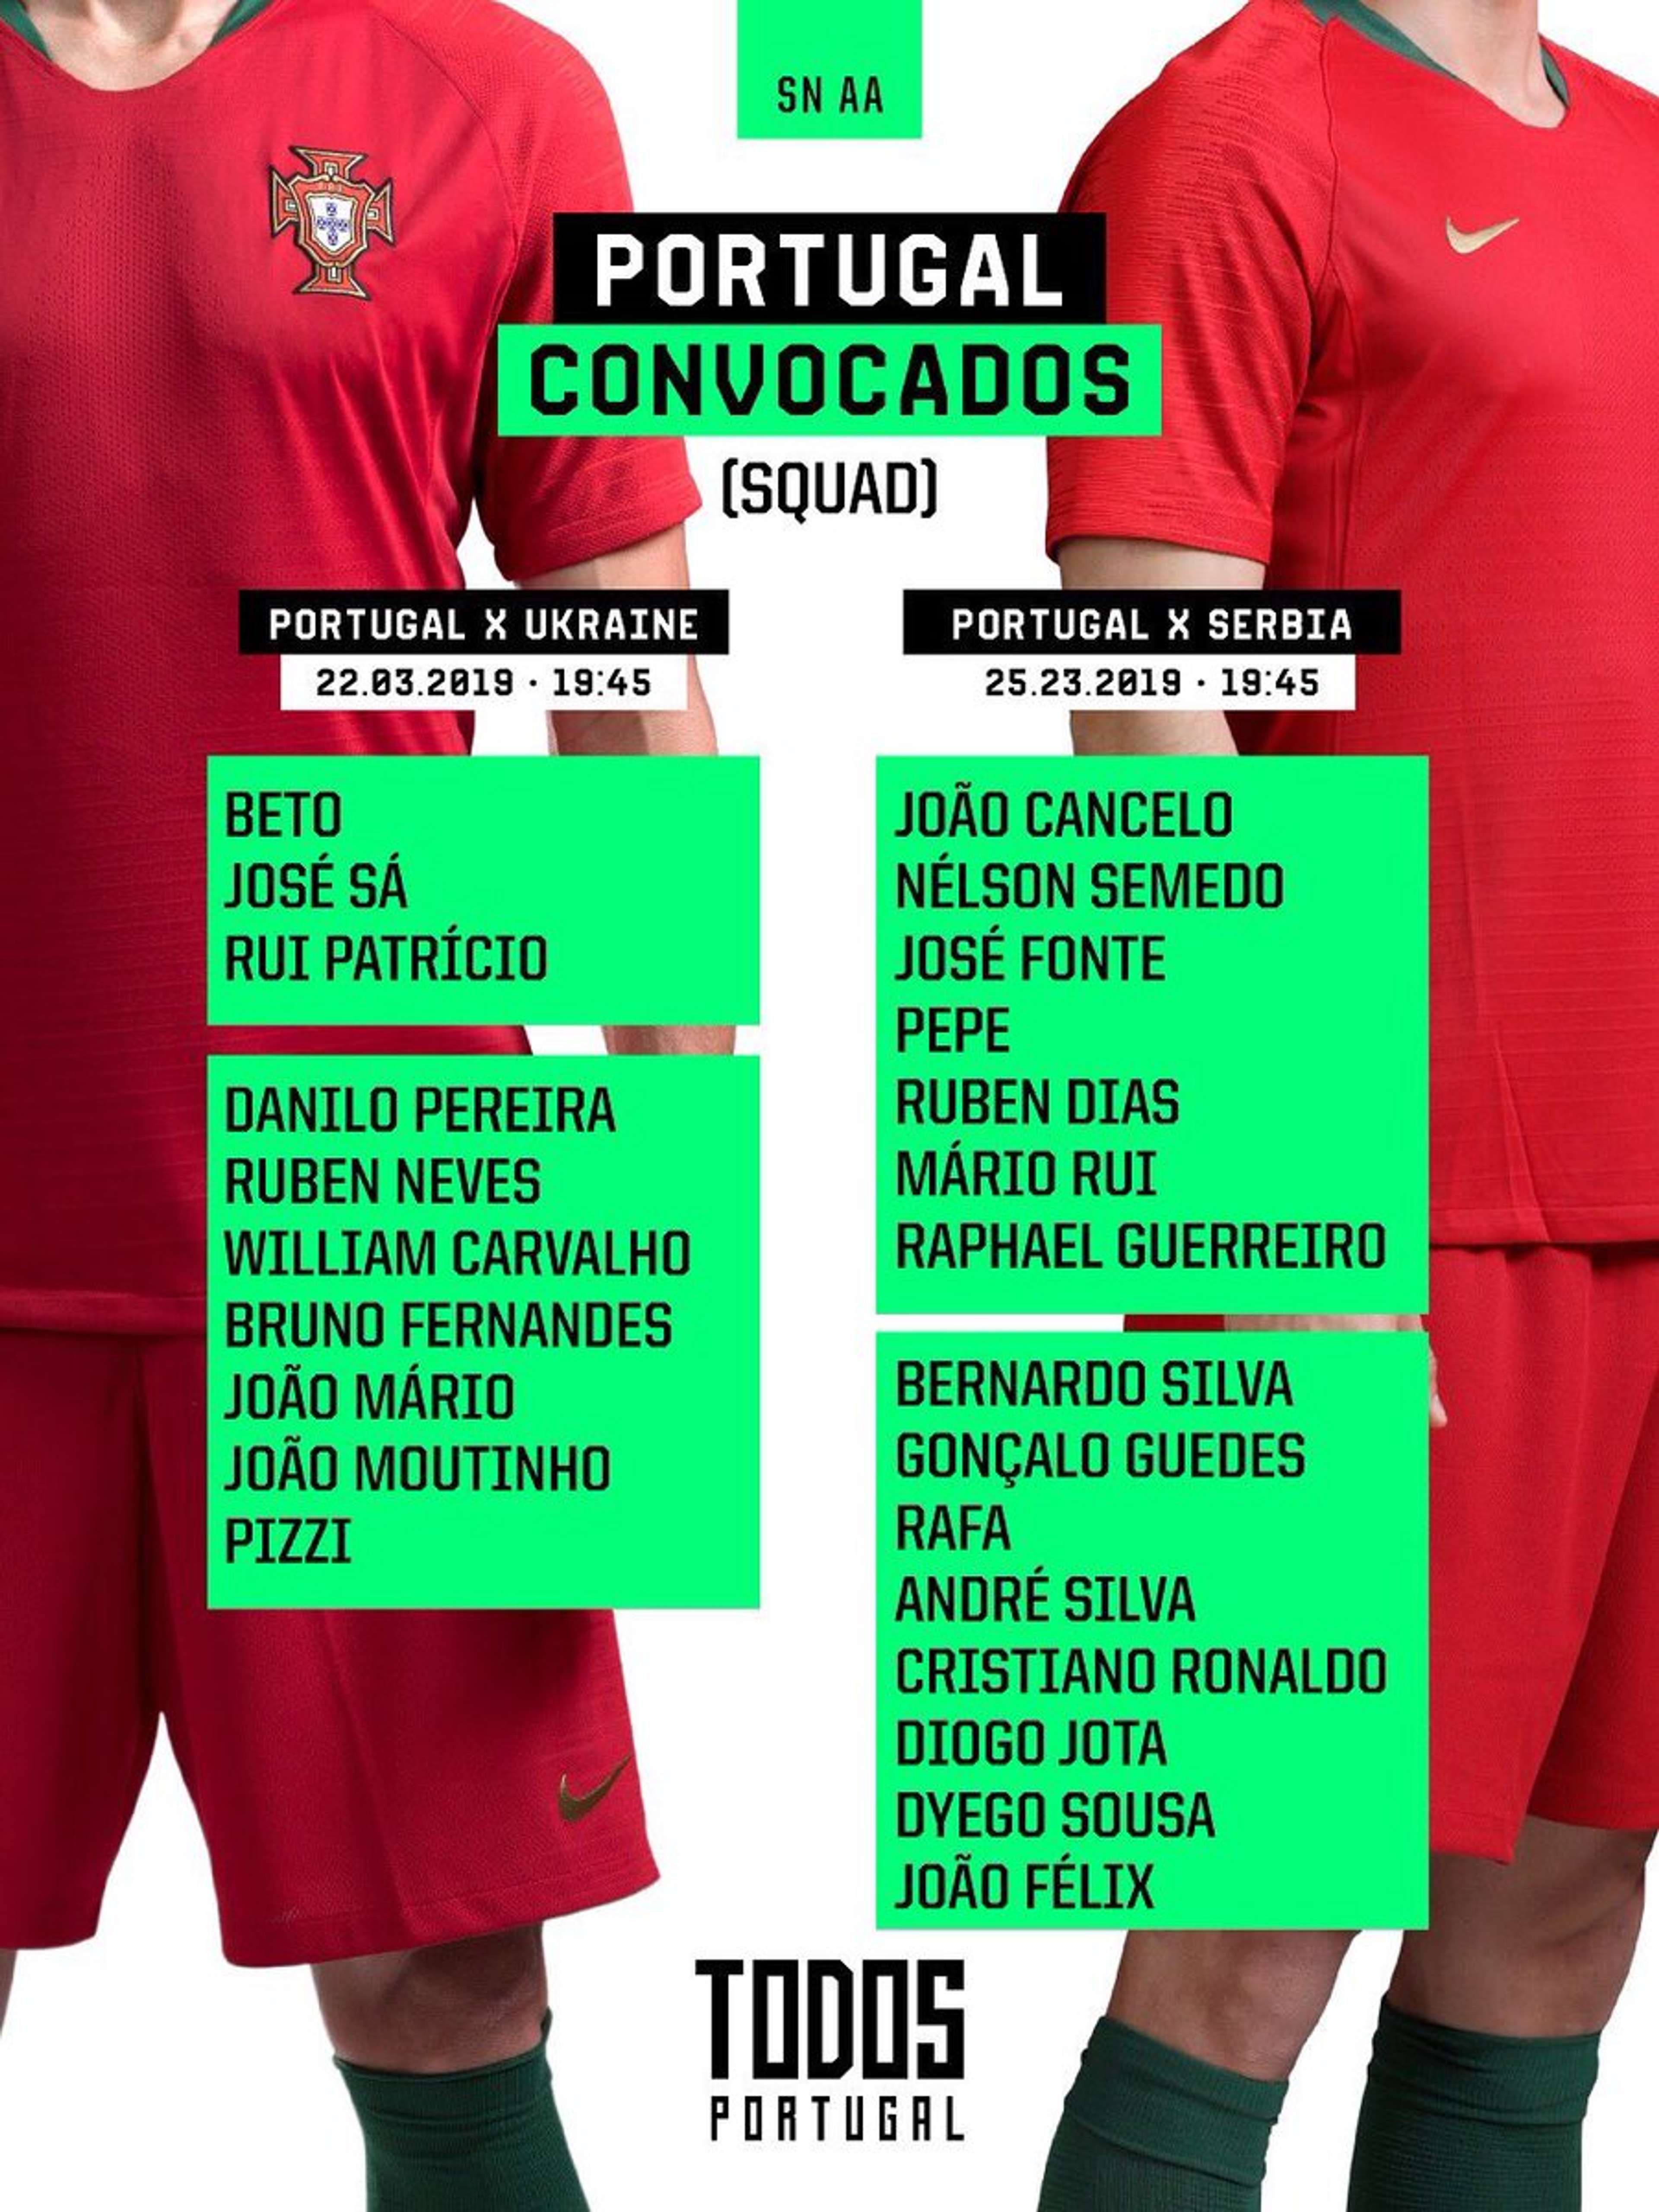 Cristiano Ronaldo en la lista de Portugal